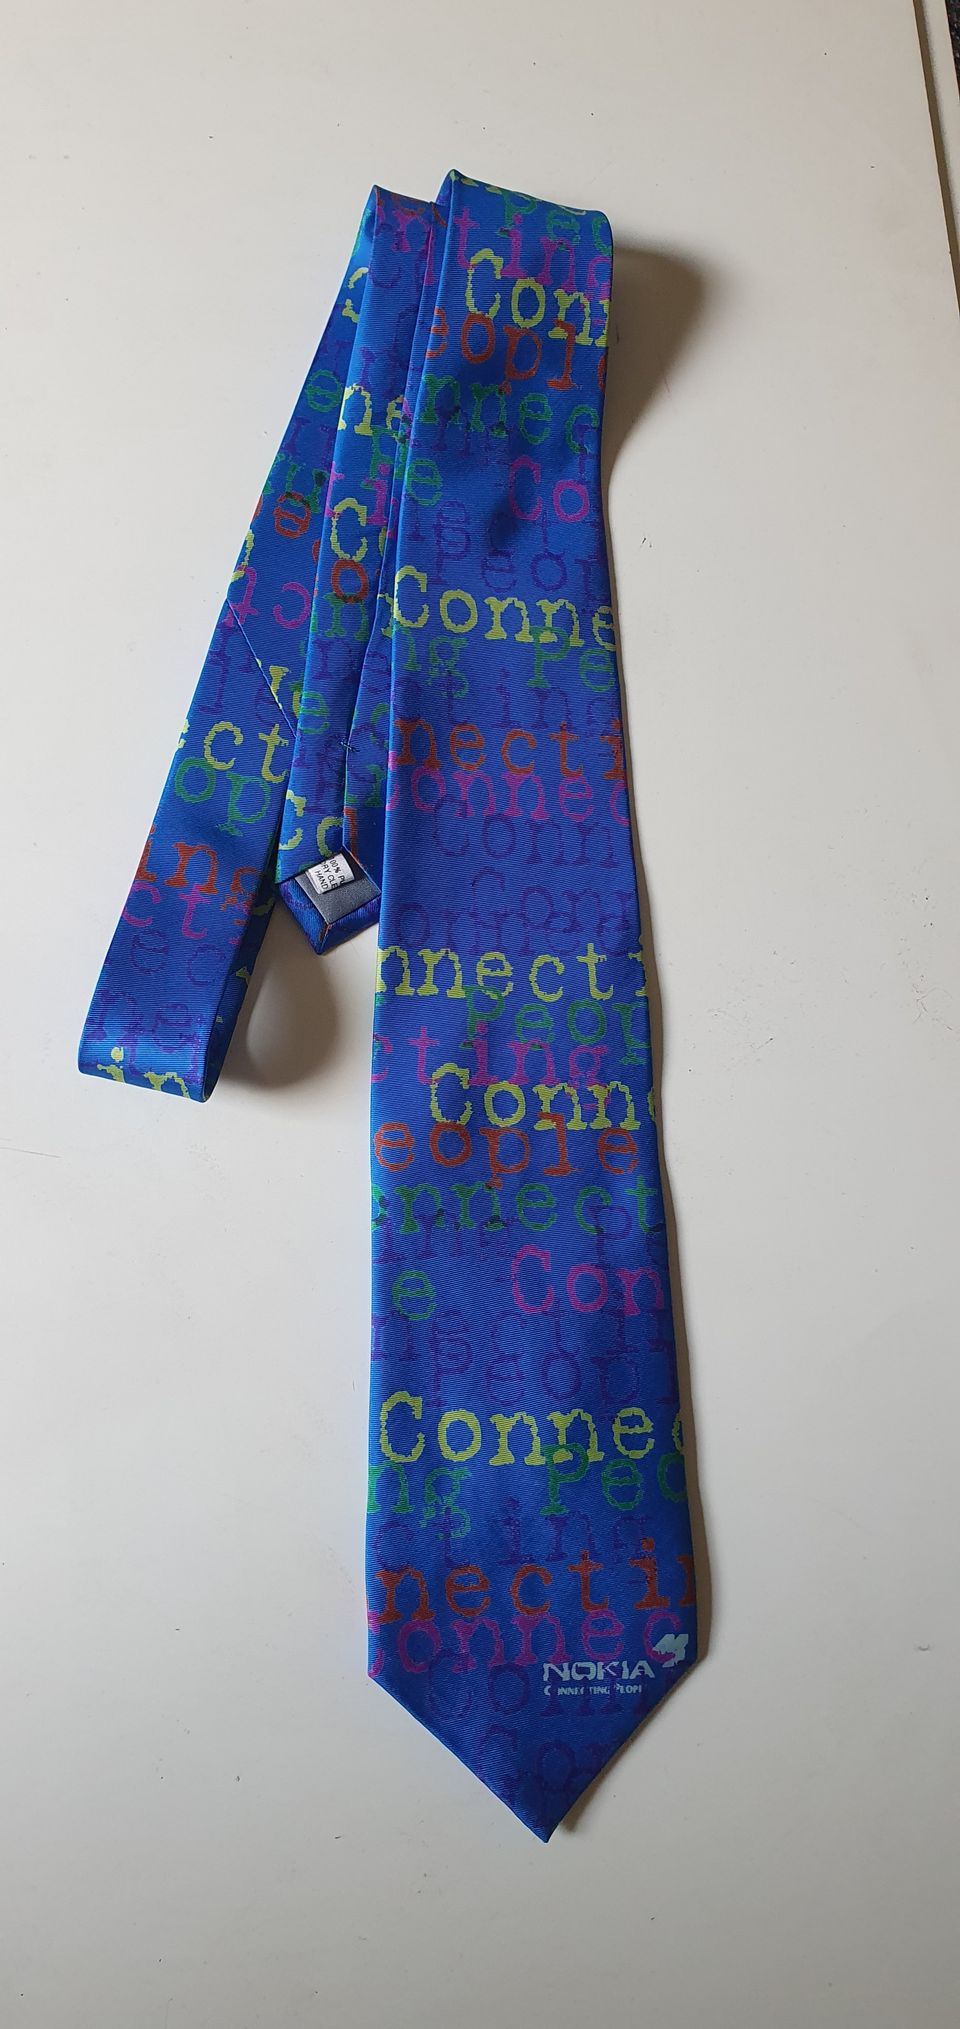 Nokia kravatti